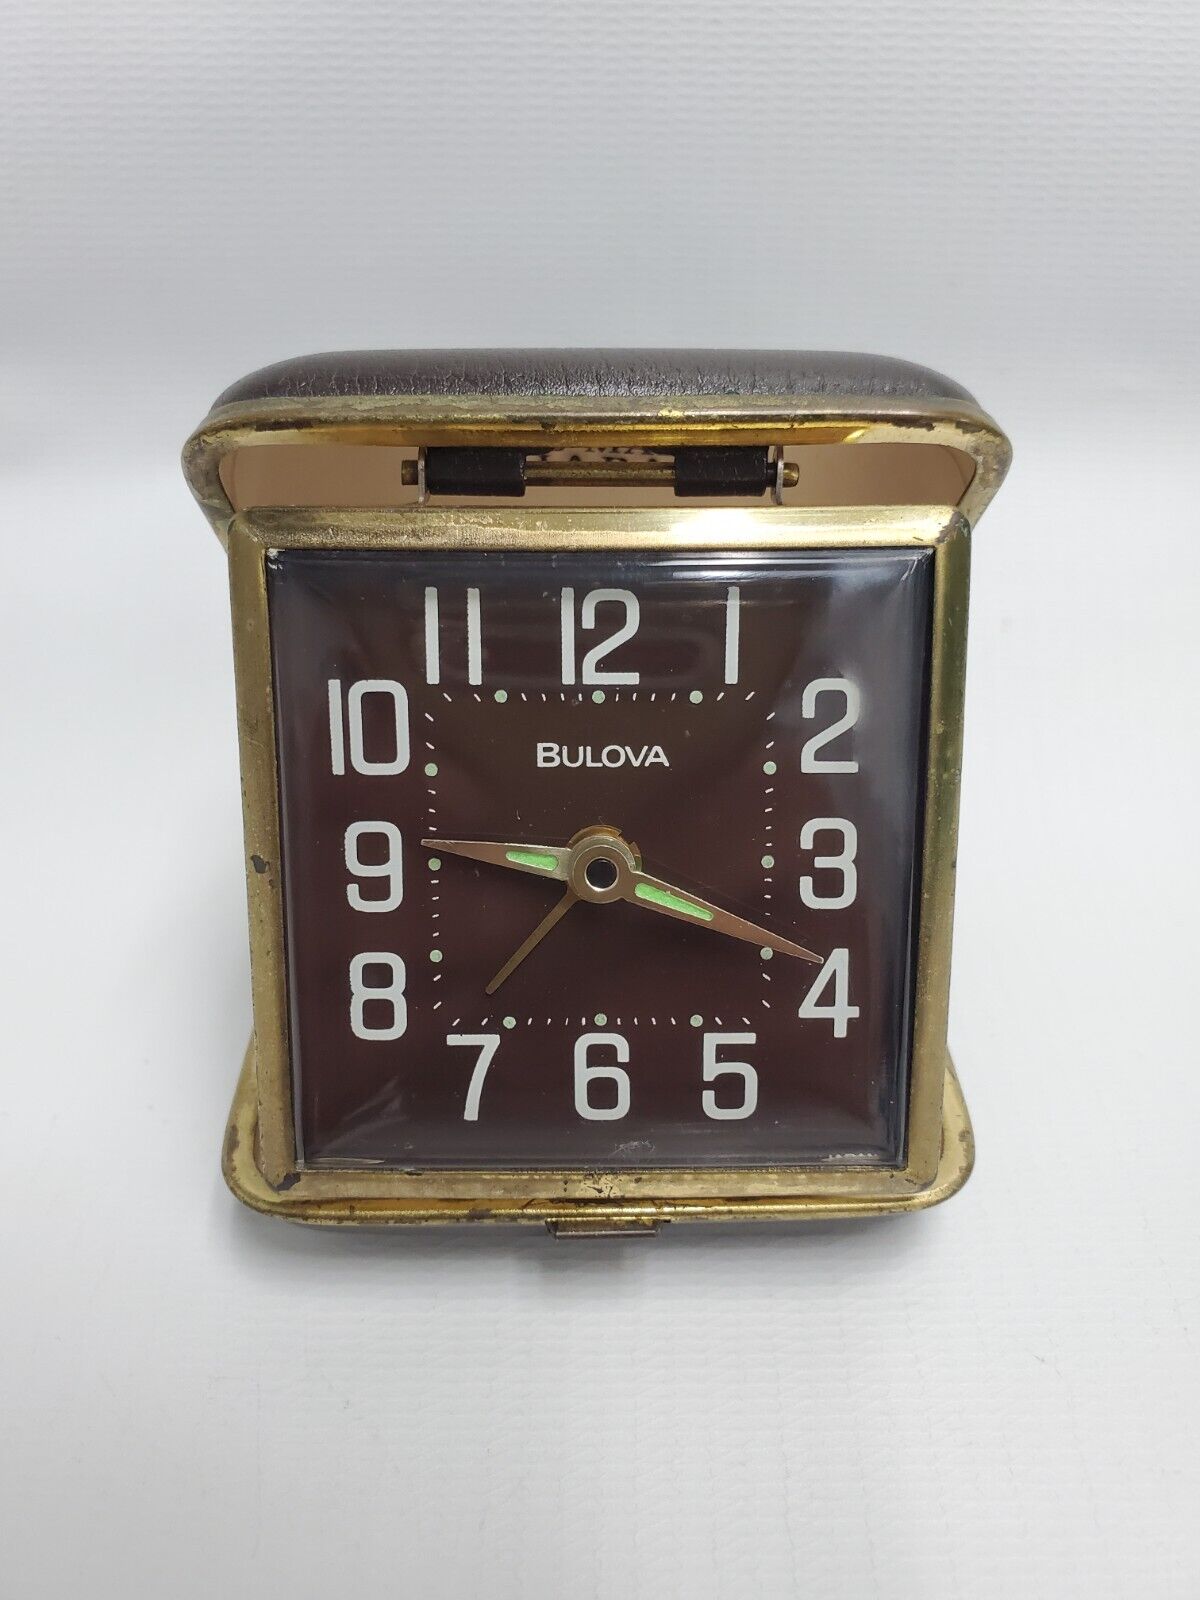 Vintage Bulova 30 Hour Key Wind Travel Alarm Clock Brown with Gold Trim